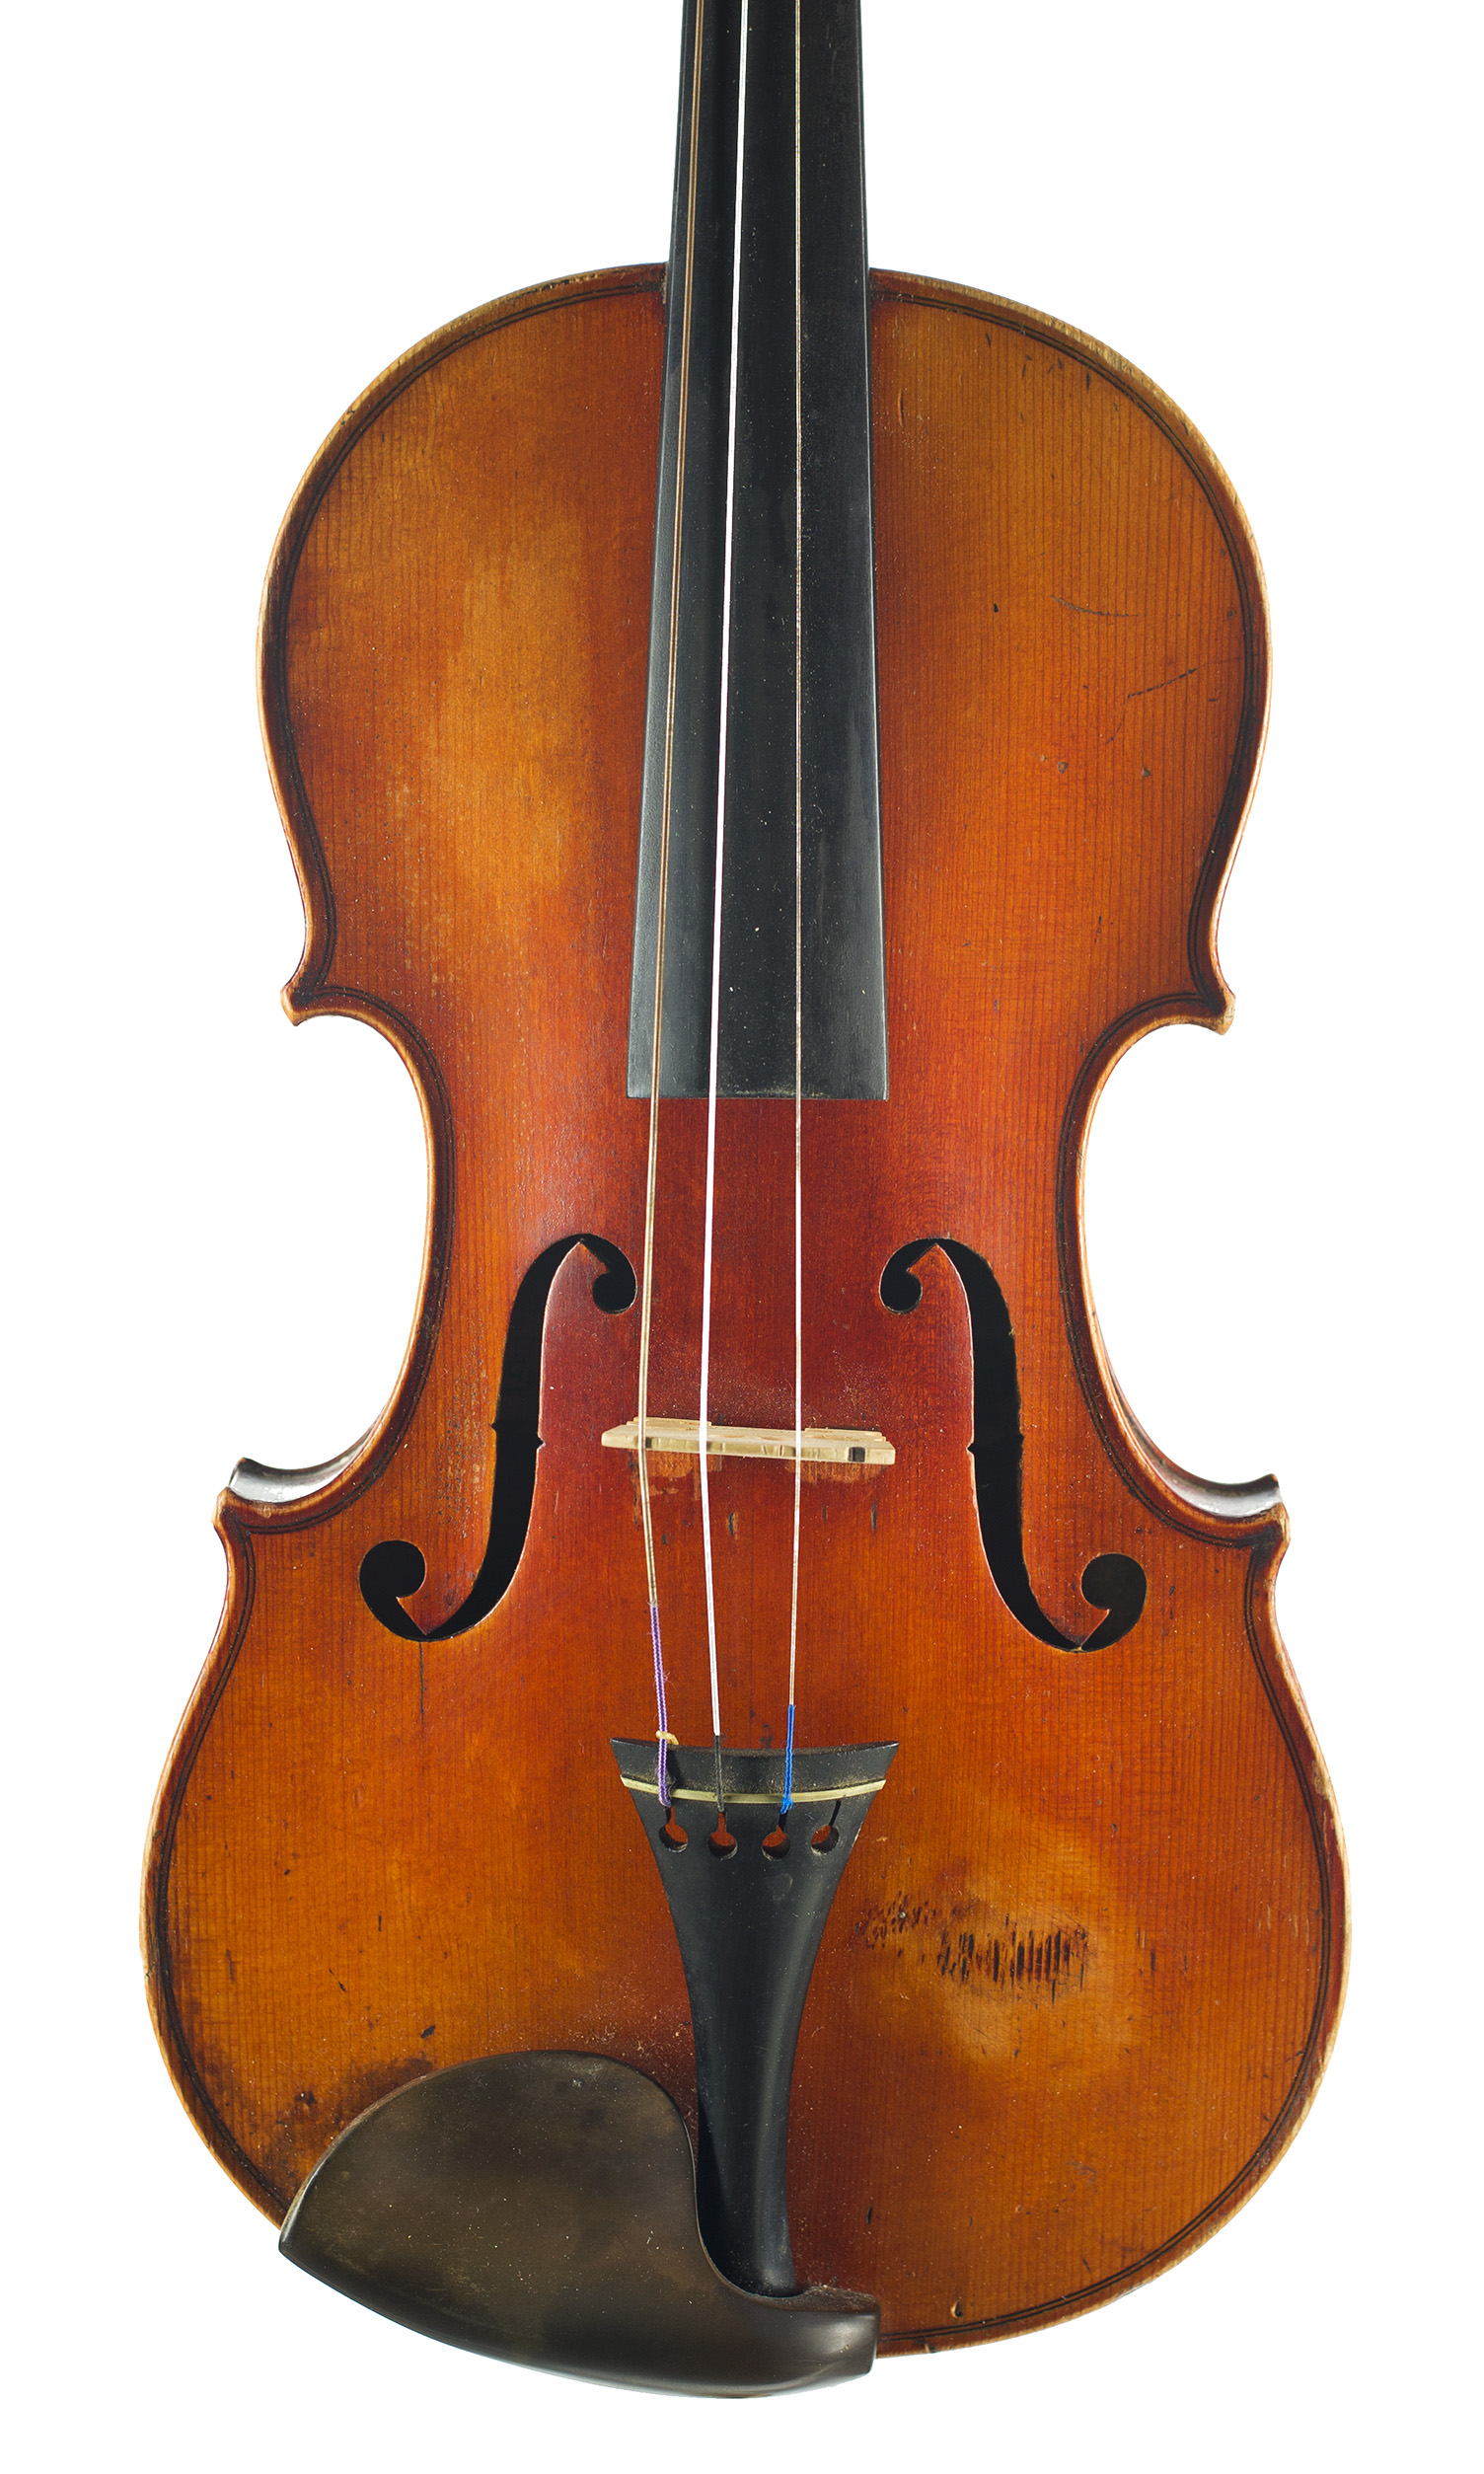 A violin, labelled JTL